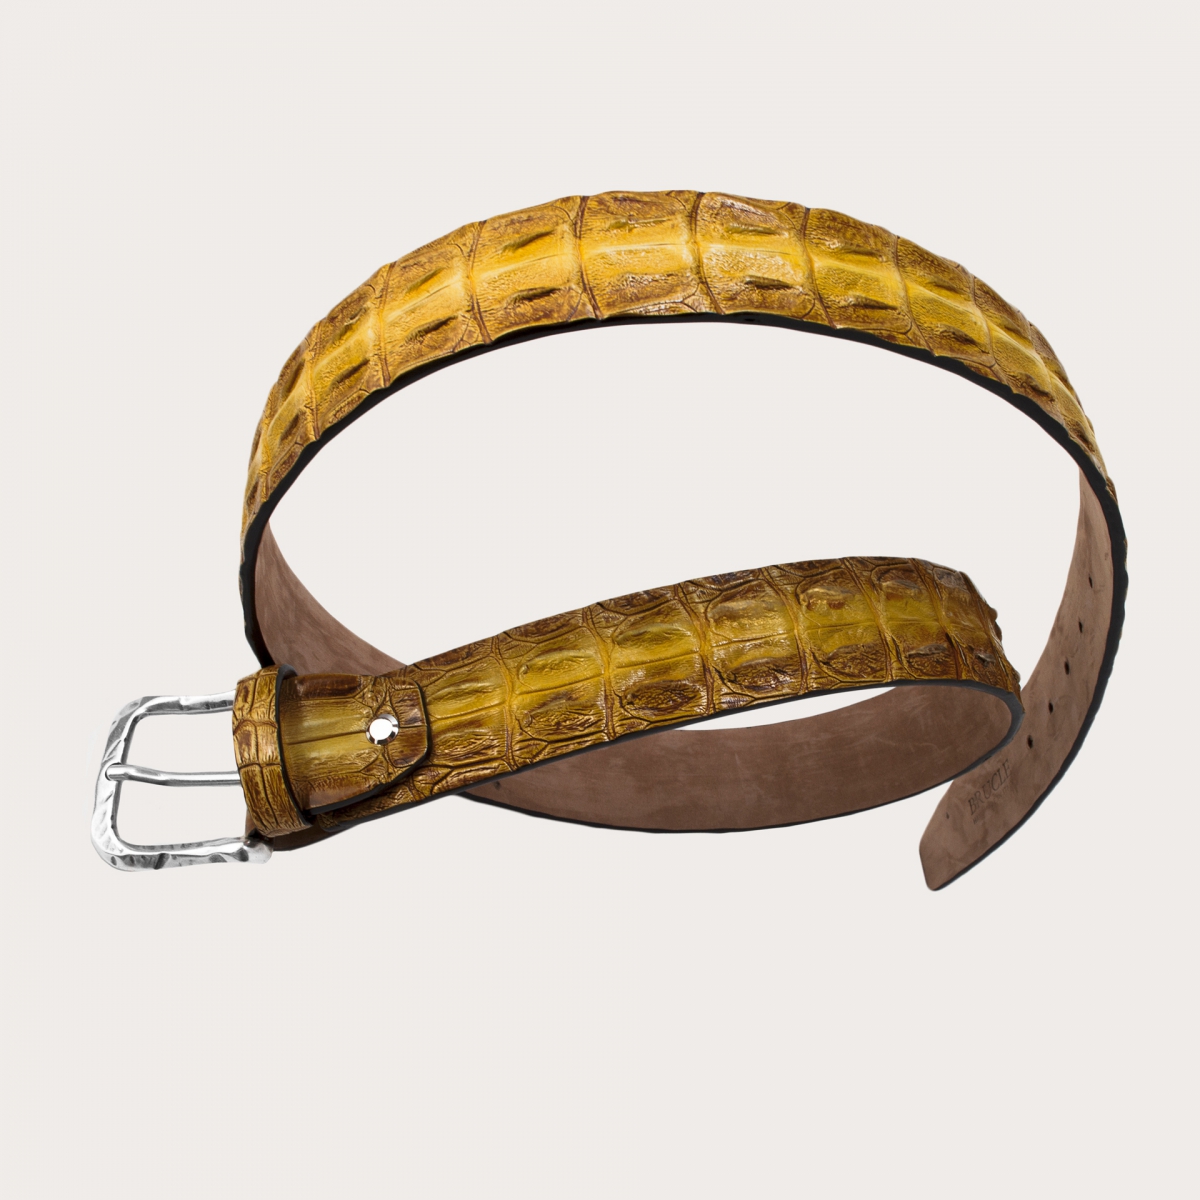 BRUCLE Hand-colored crocodile belt, yellow